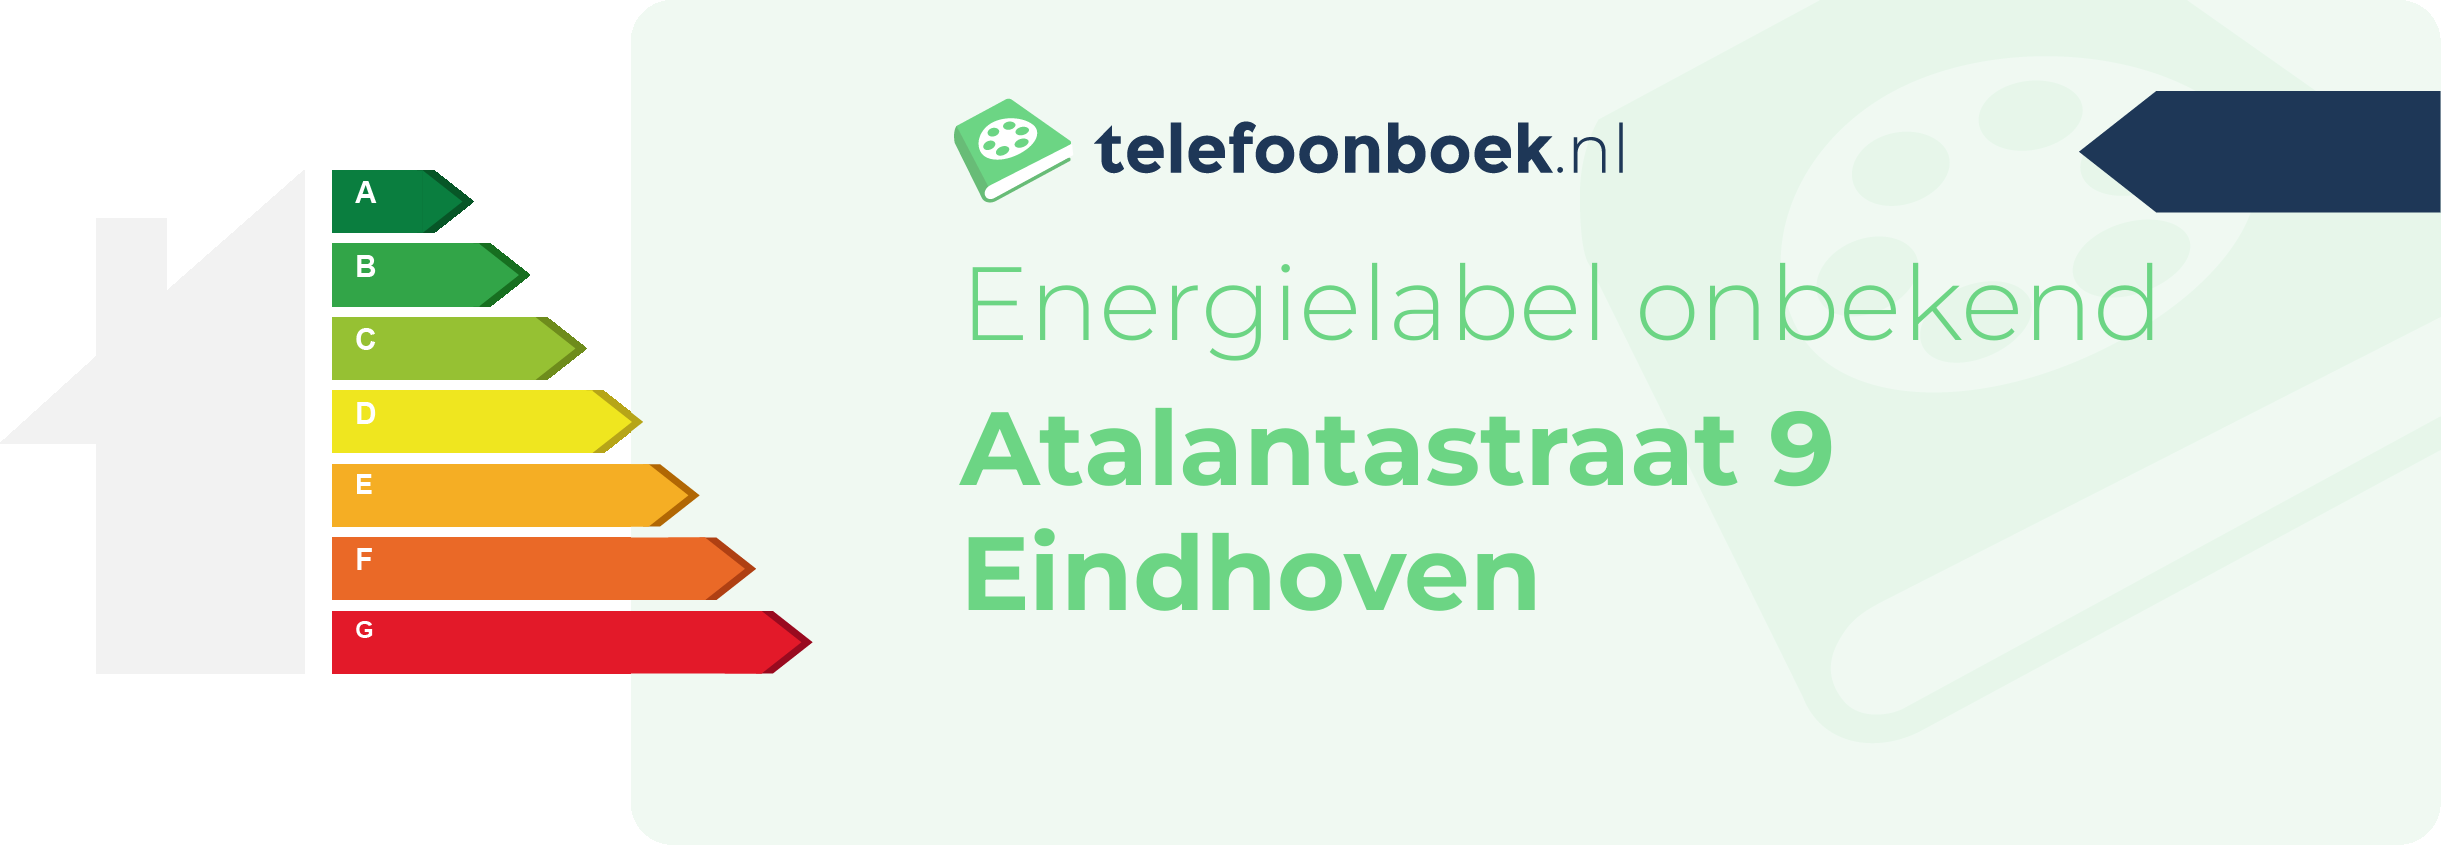 Energielabel Atalantastraat 9 Eindhoven